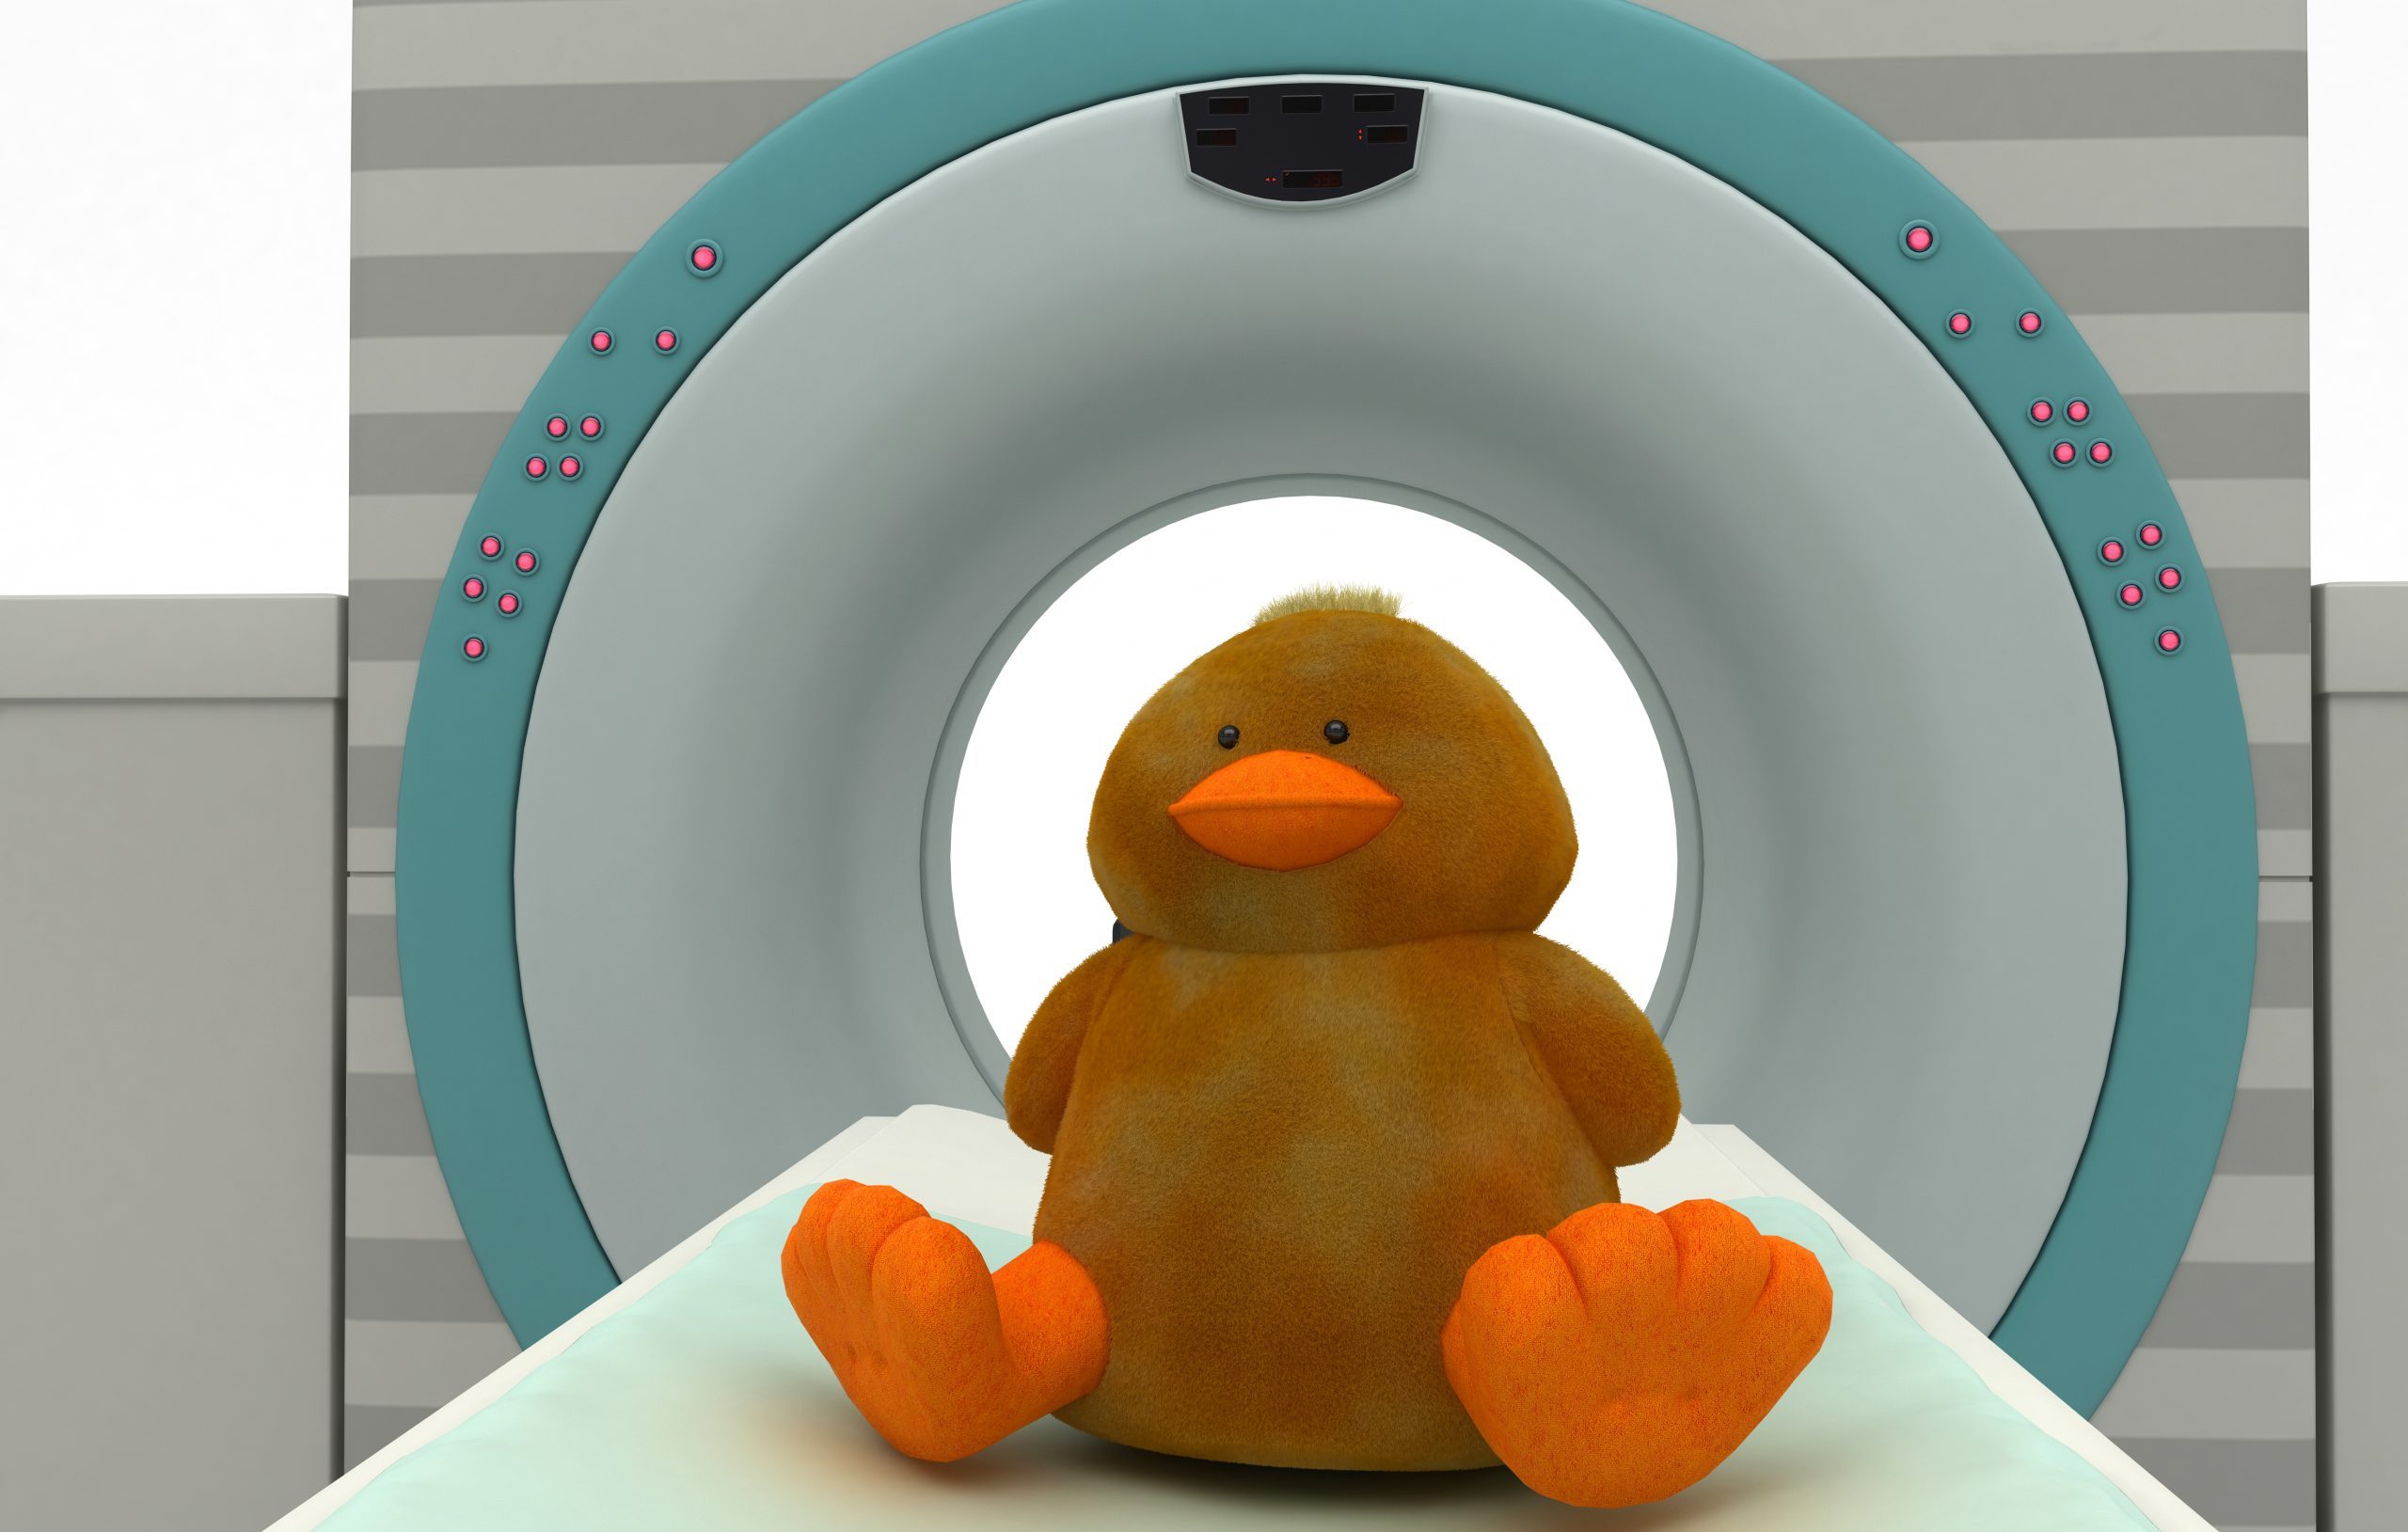 Stuffed animal duck inside MRI device